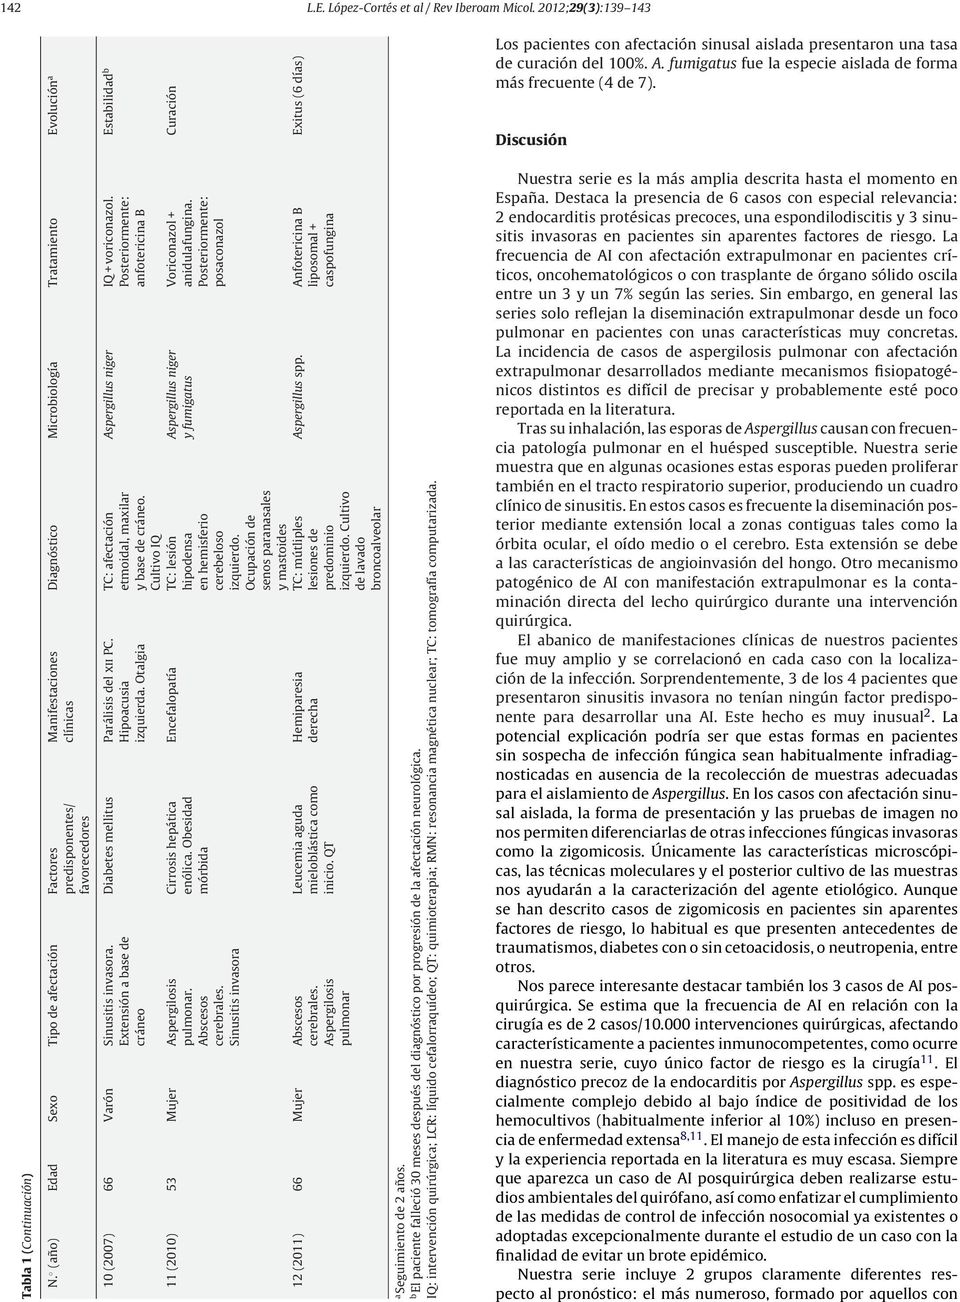 Cultivo IQ Diabetes mellitus Parálisis del xii PC. Hipoacusia izquierda. Otalgia 10 (2007) 66 Varón Sinusitis invasora. Extensión a base de cráneo Voriconazol + anidulafungina.